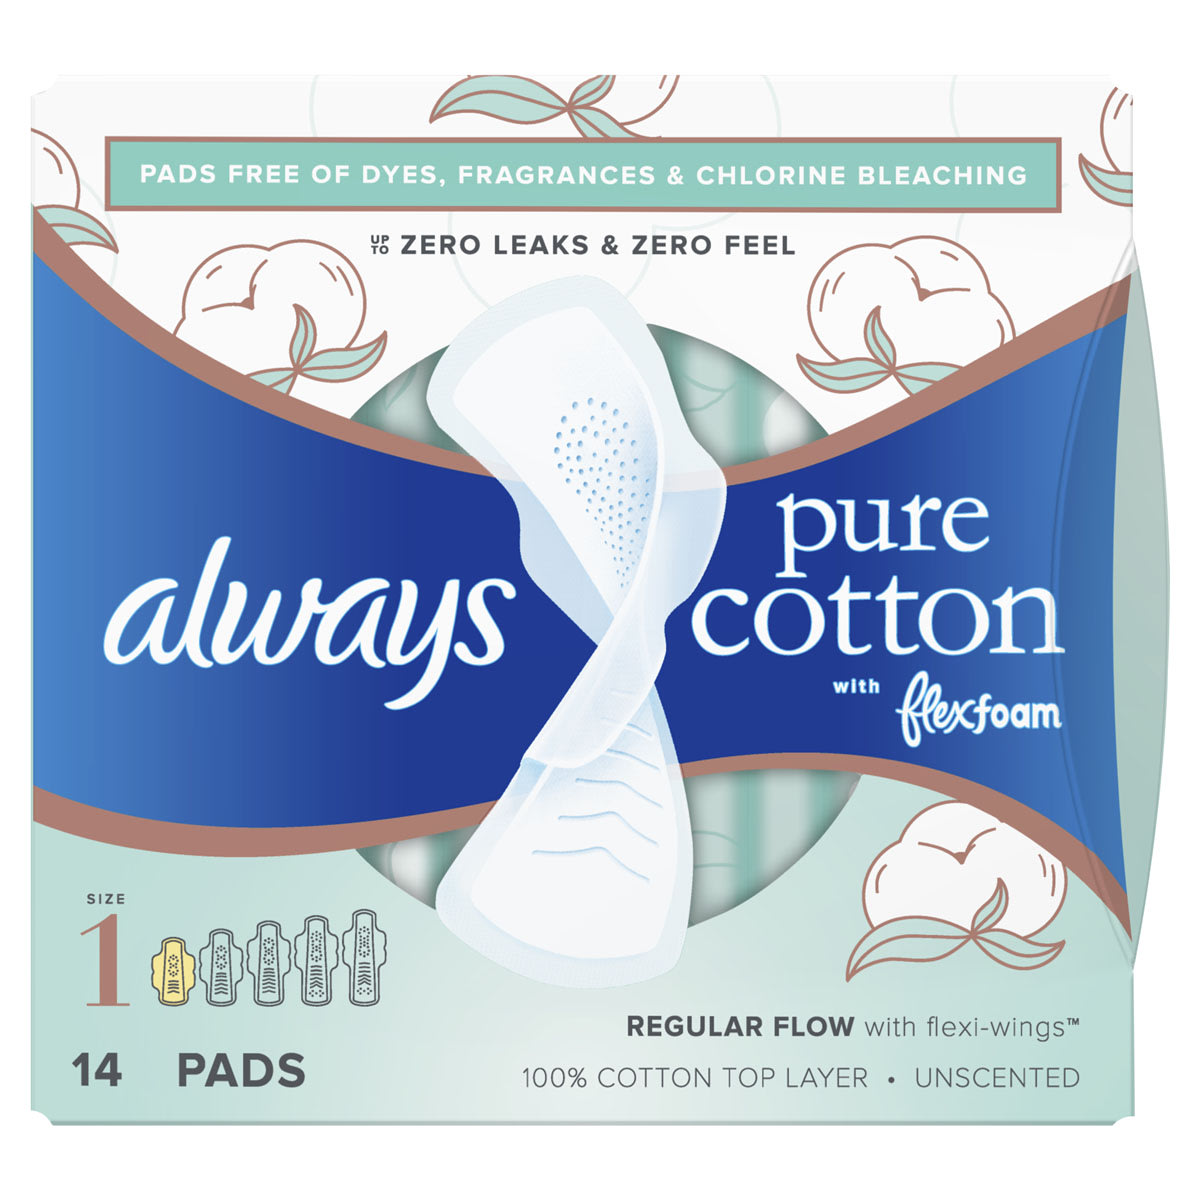 Always Pads, Pure Cotton with Flexfoam, Regular Flow with Flexi